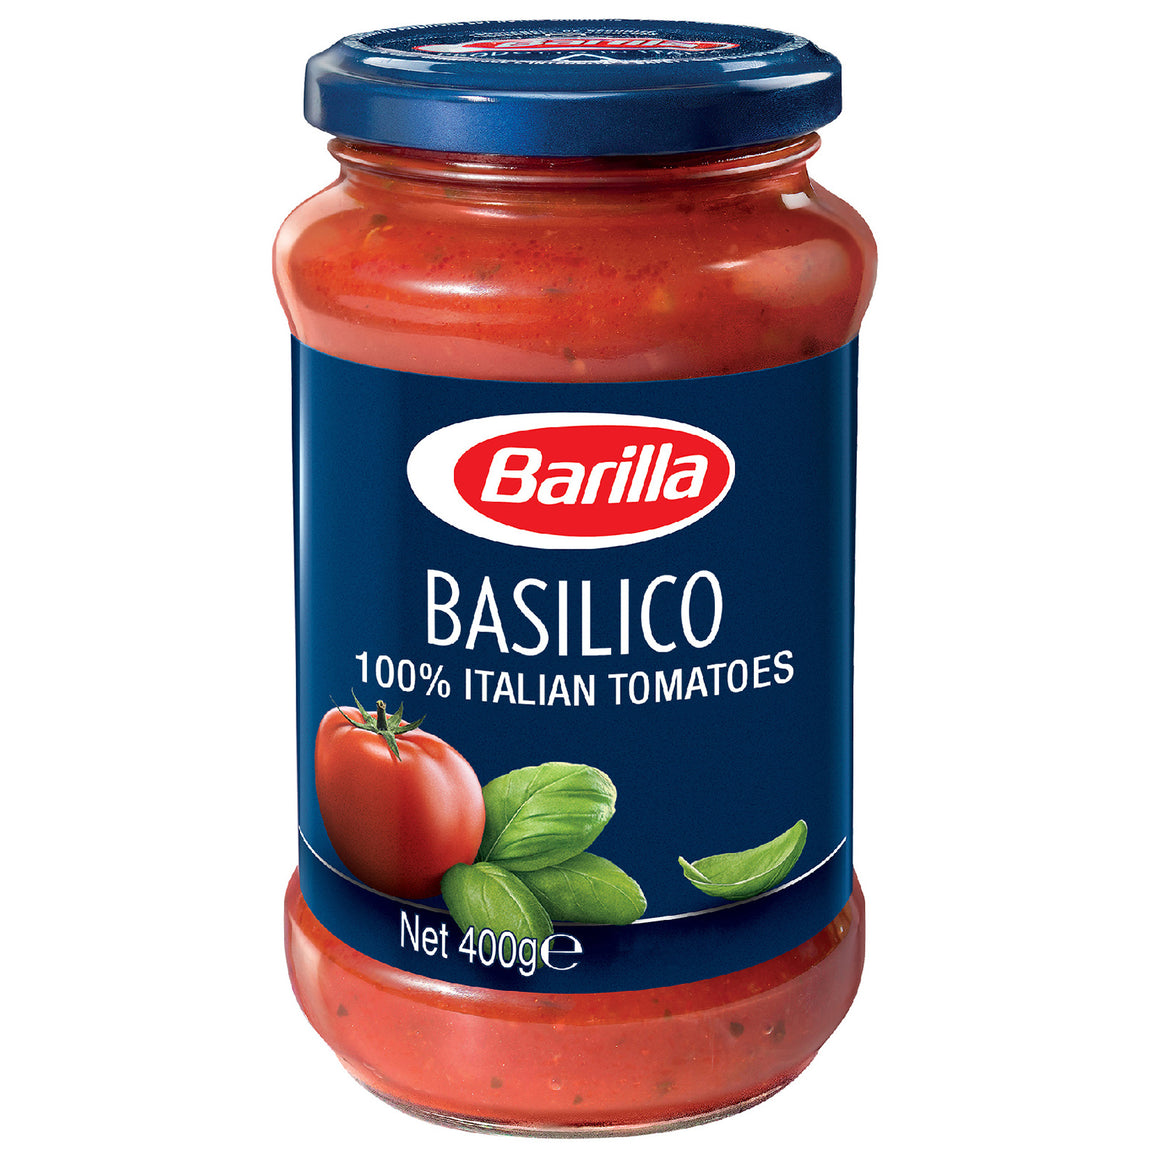 Barilla Basilico Pasta Sauce with Italian Tomato and Basil 400g